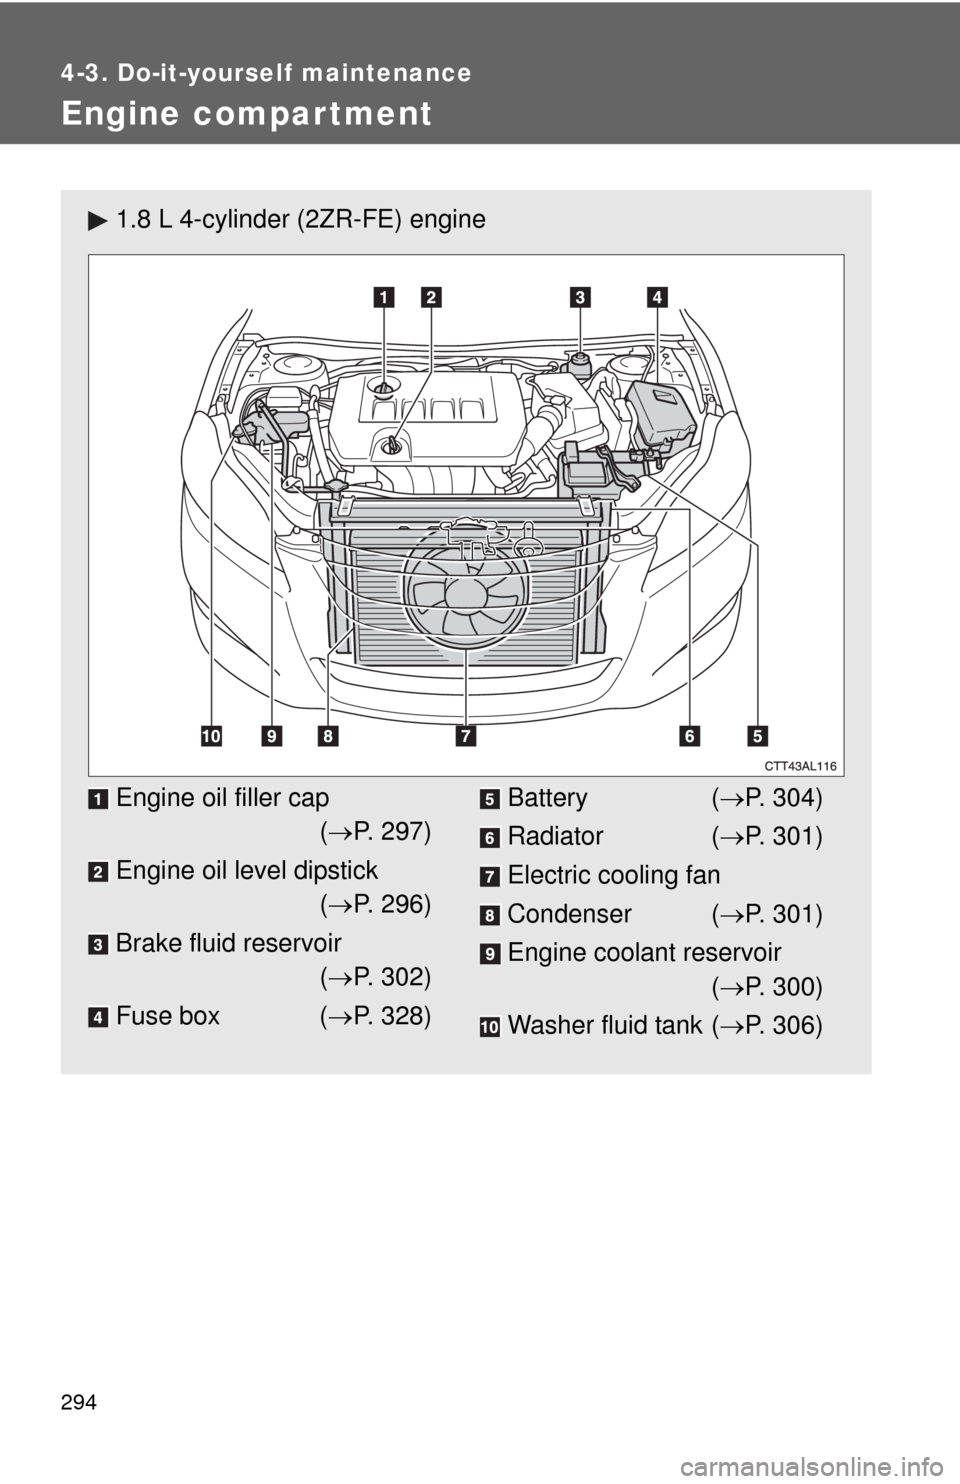 TOYOTA MATRIX 2010 E140 / 2.G Owners Manual 294
4-3. Do-it-yourself maintenance
Engine compar tment
1.8 L 4-cylinder (2ZR-FE) engine
Engine oil filler cap
(P. 297)
Engine oil level dipstick
(P. 296)
Brake fluid reservoir
(P. 302)
Fuse 